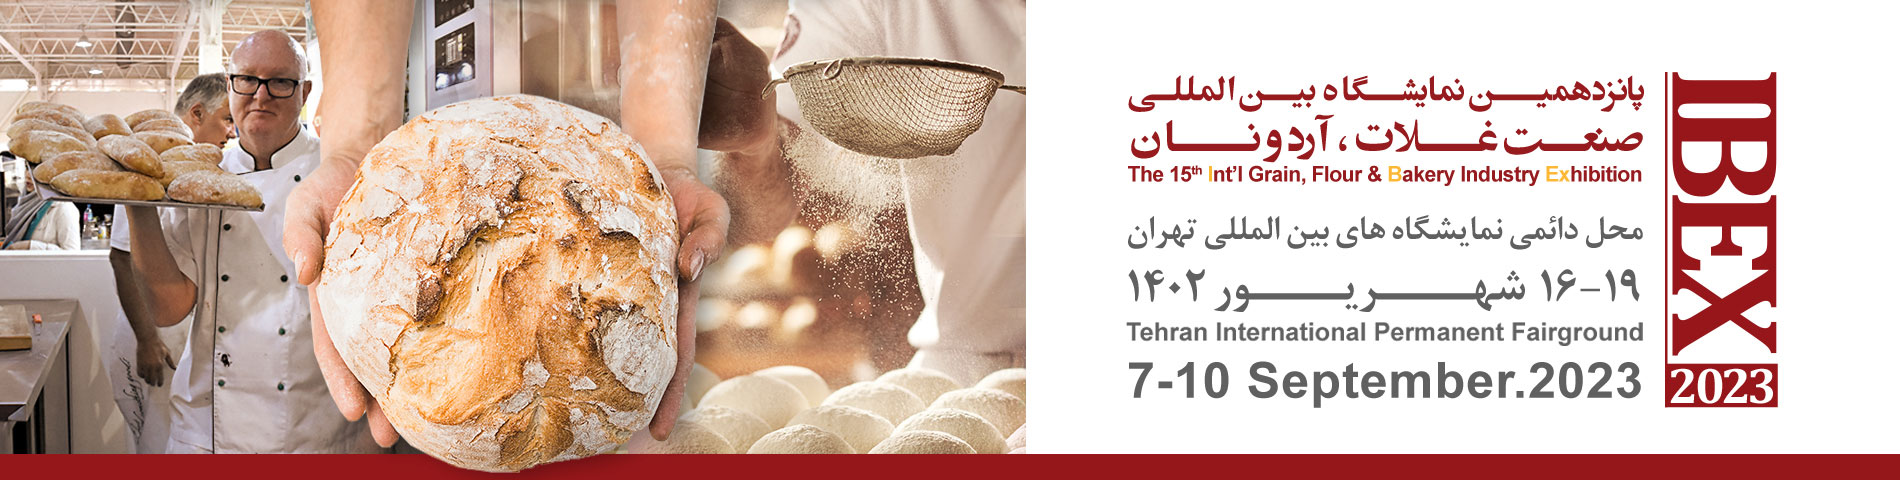 1681039592 header 14 - The 15th International Grain, Flour & Bakery Exhibition 2023 in Iran/Tehran